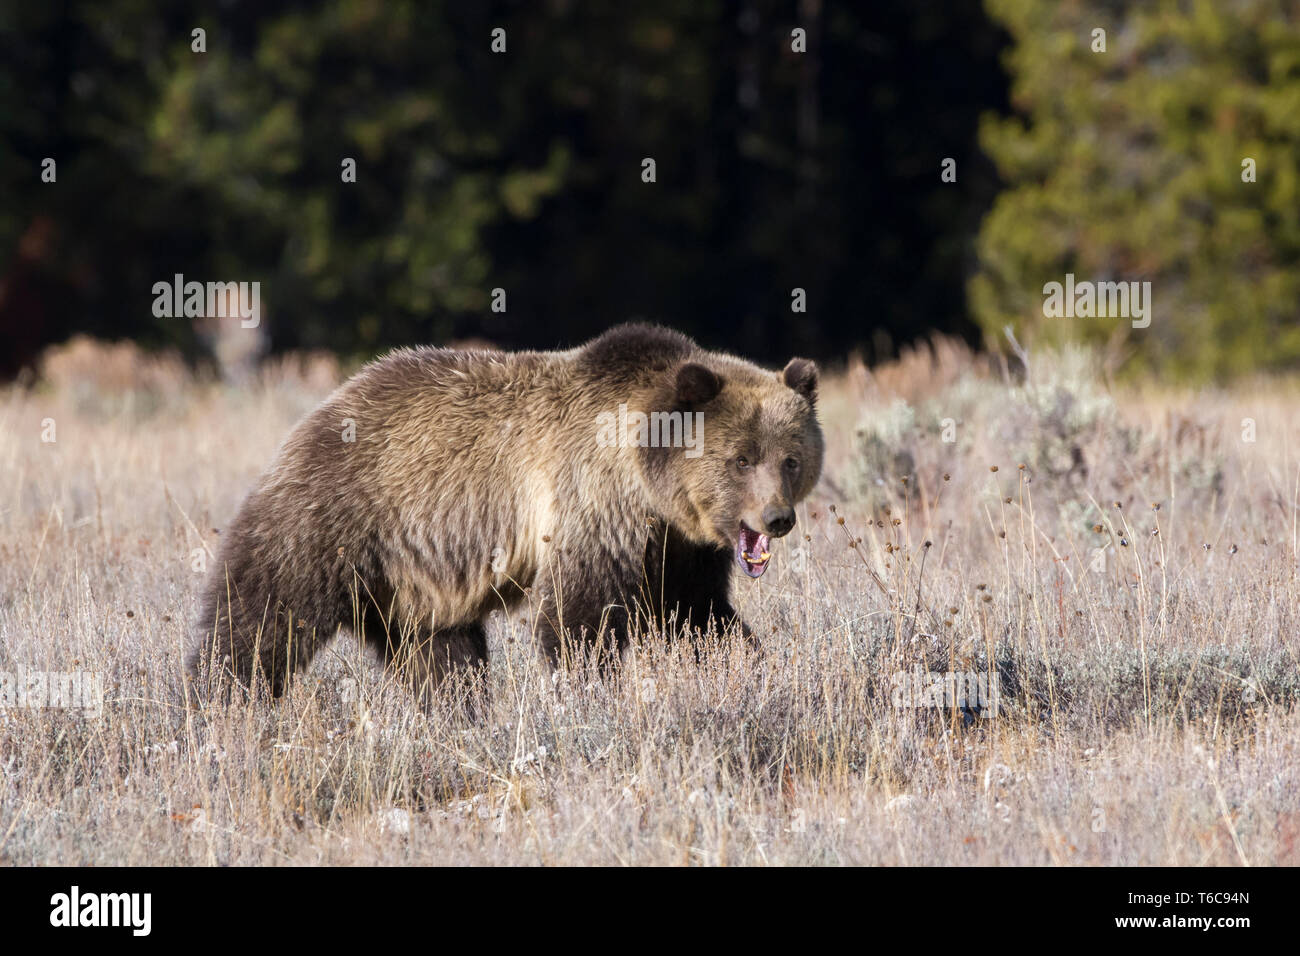 Grizzlybär (Ursus arctos Horribilis). Der Grand Teton National Park, Wyoming, USA. Stockfoto